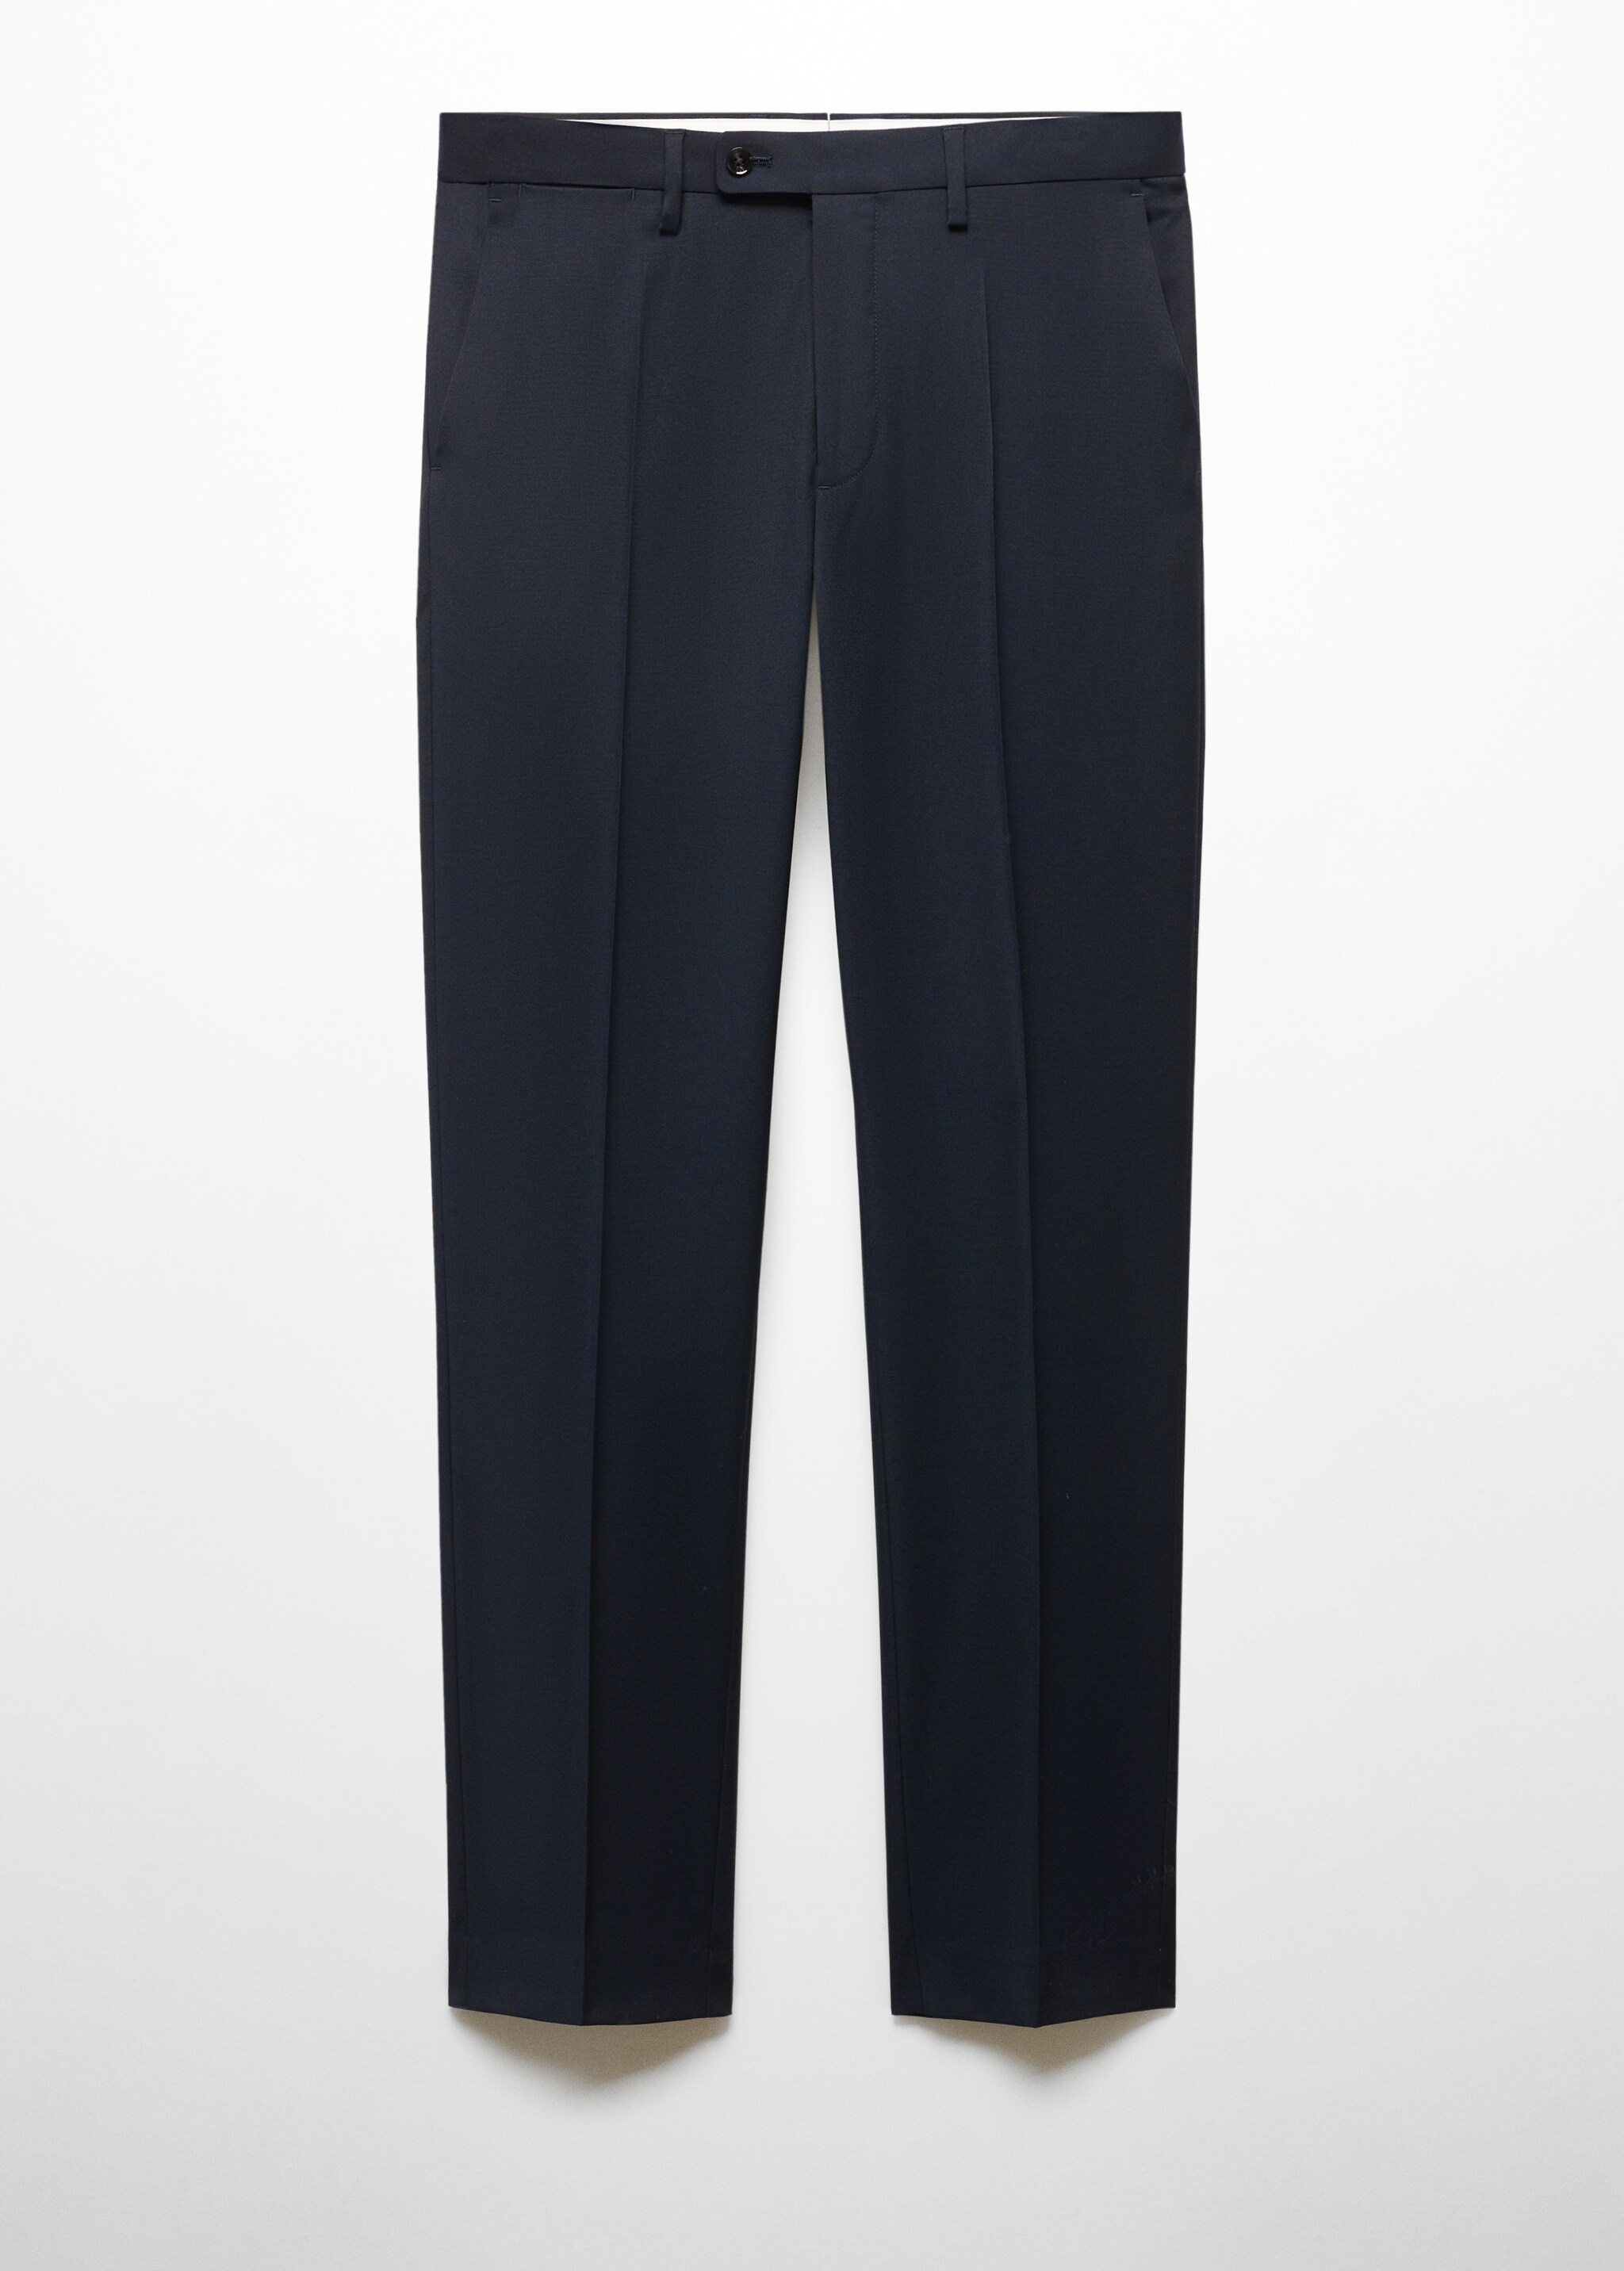 Slim fit pantolon takım - Modelsiz ürün